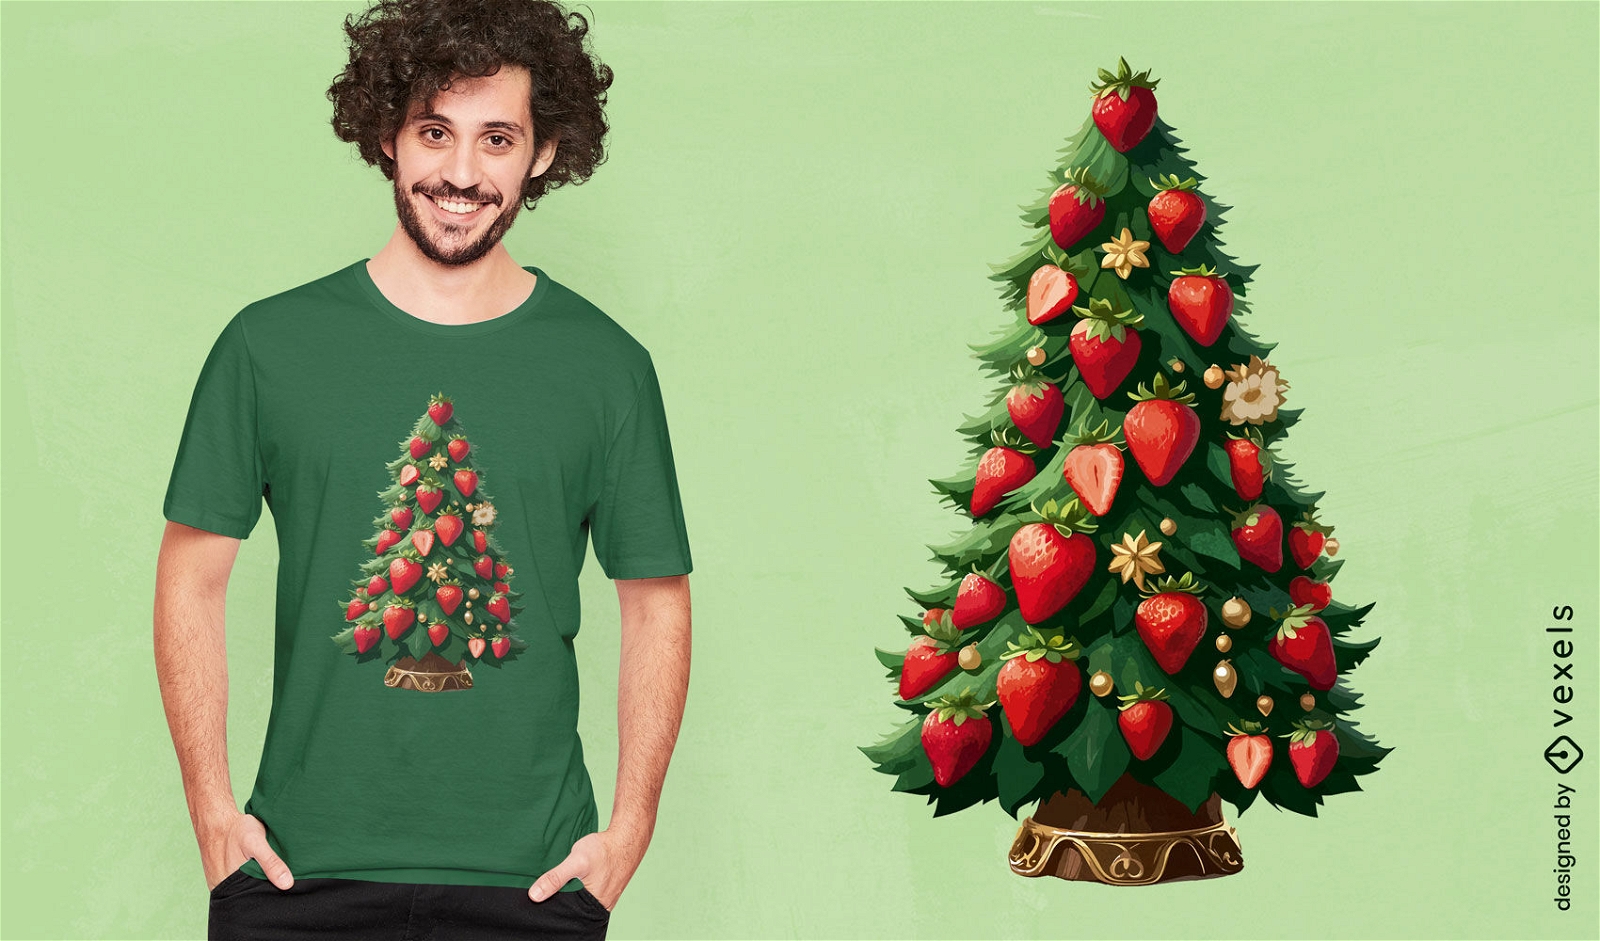 Strawberry Christmas tree t-shirt design